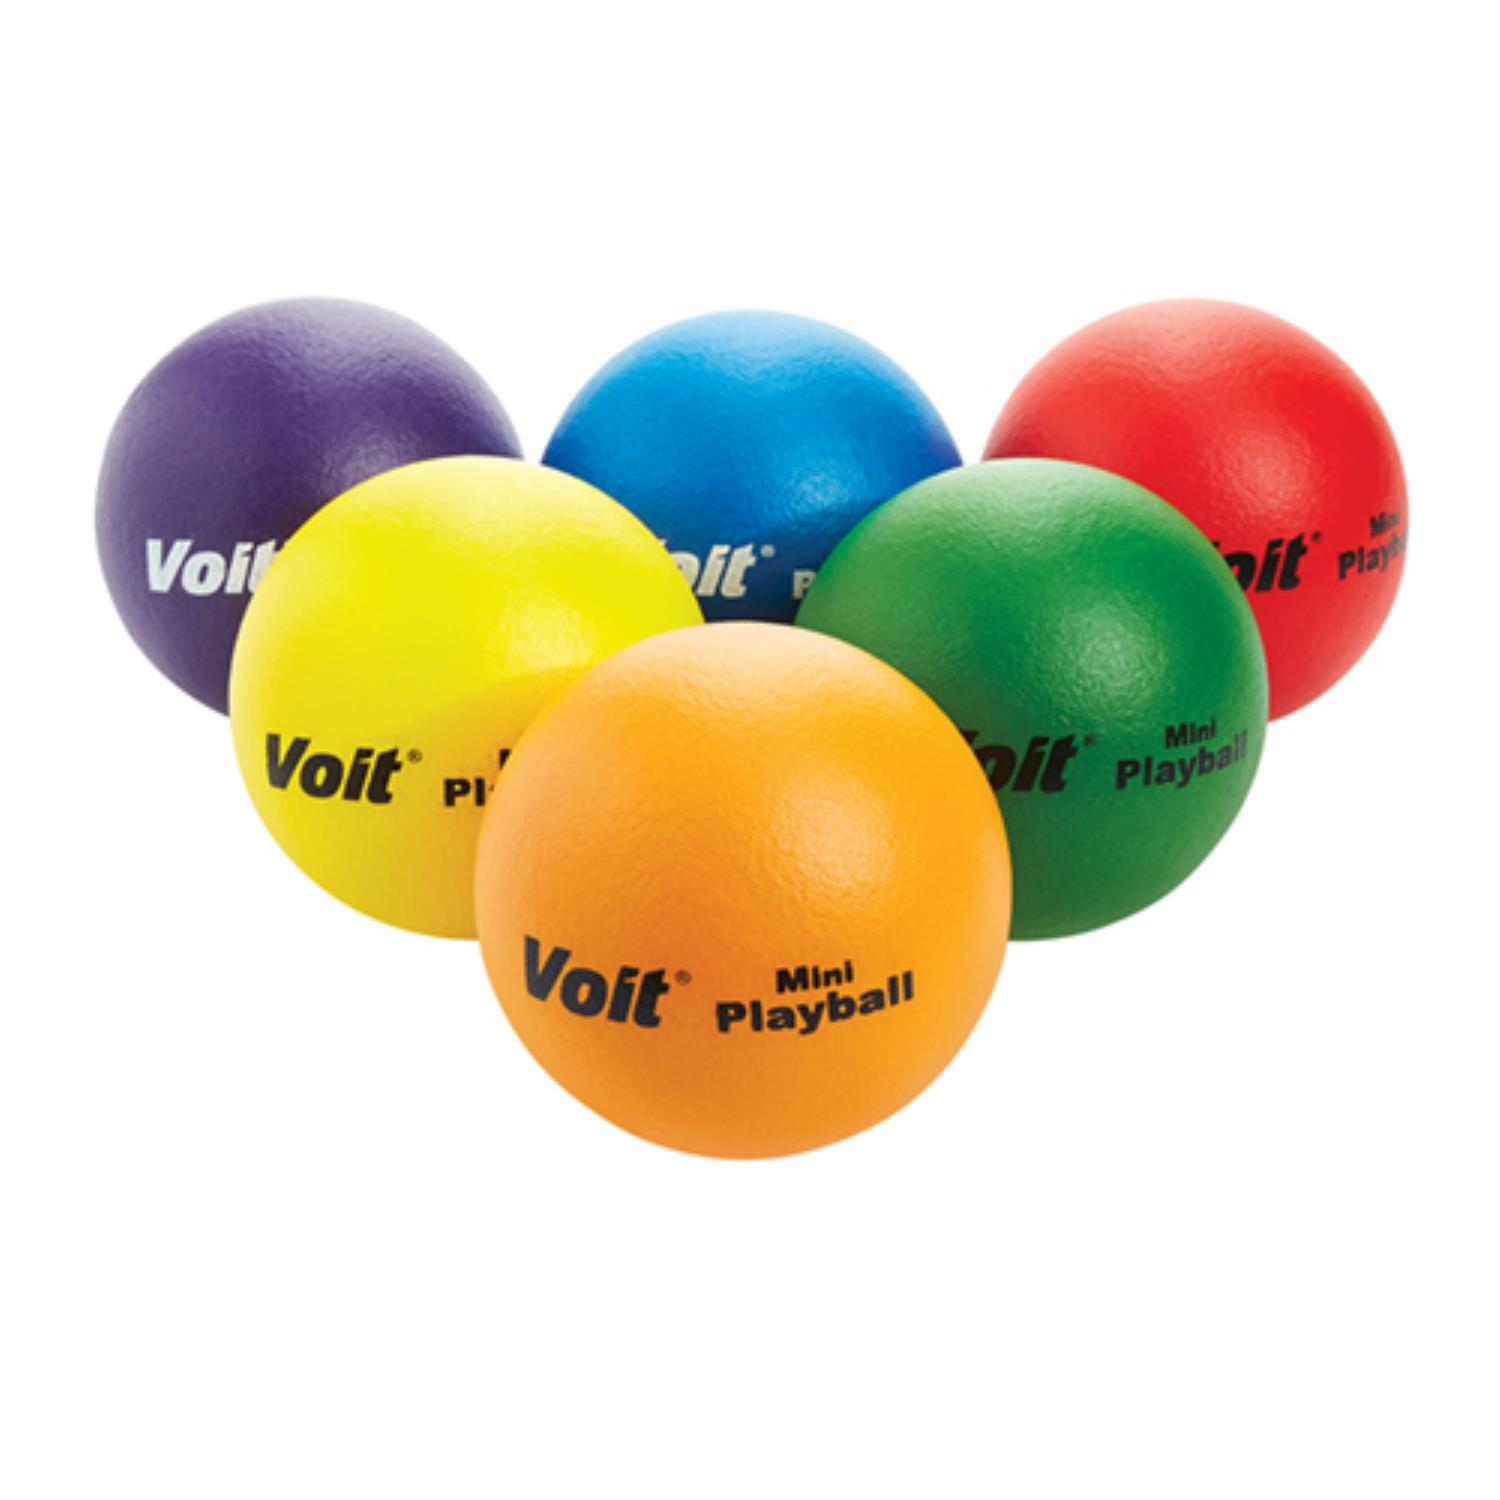 Athletic Connection Voit 5" Set of 6 Mini Playball Tuff Balls 1181555